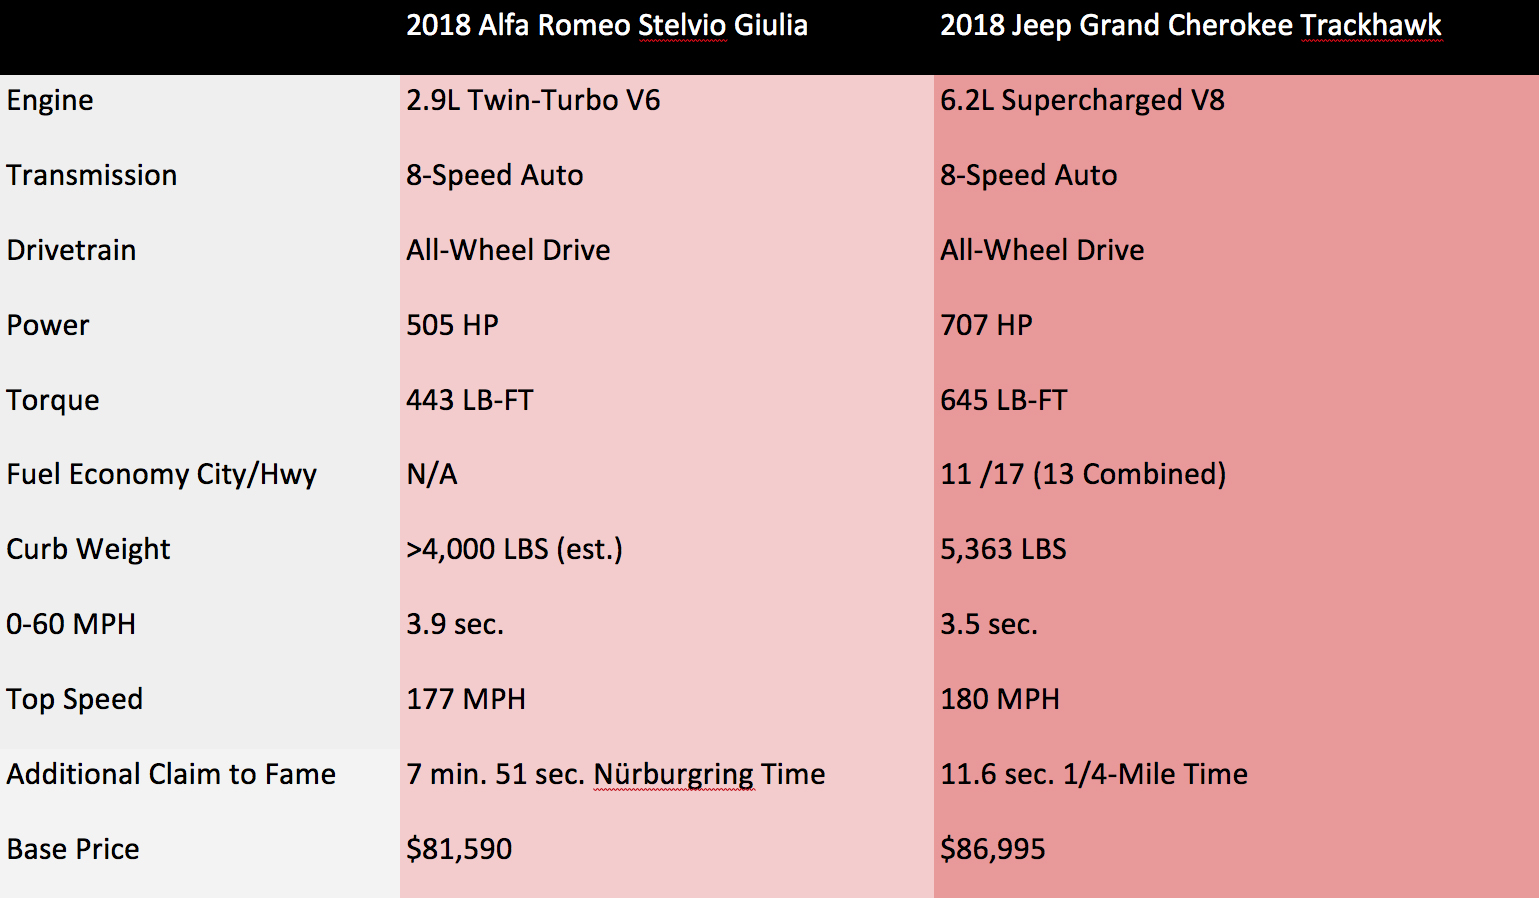 Jeep Grand Cherokee Comparison Chart